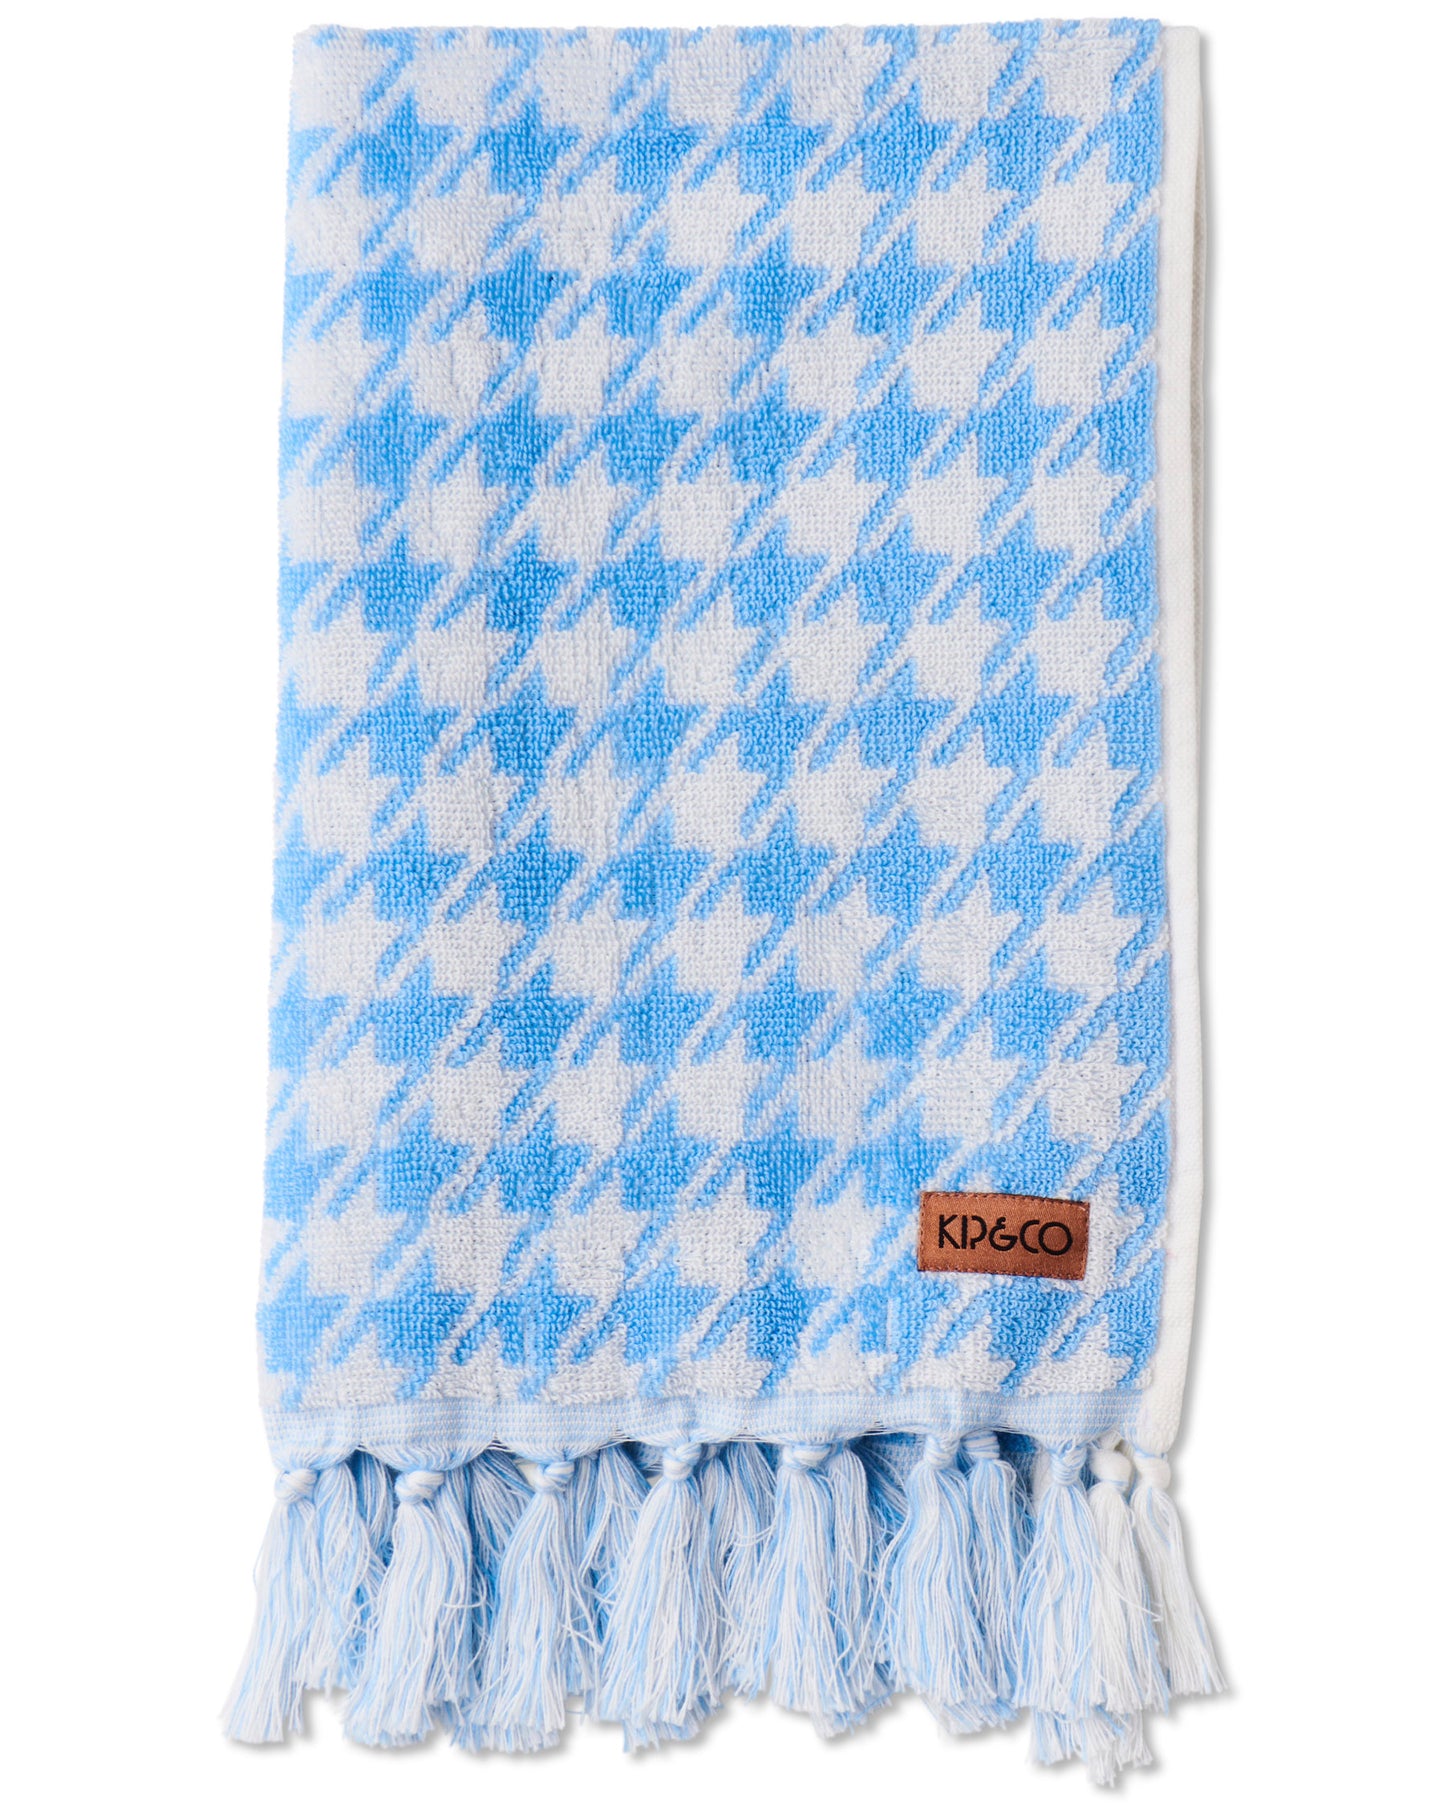 Kip & Co - Houndstooth Blue Terry hand towel